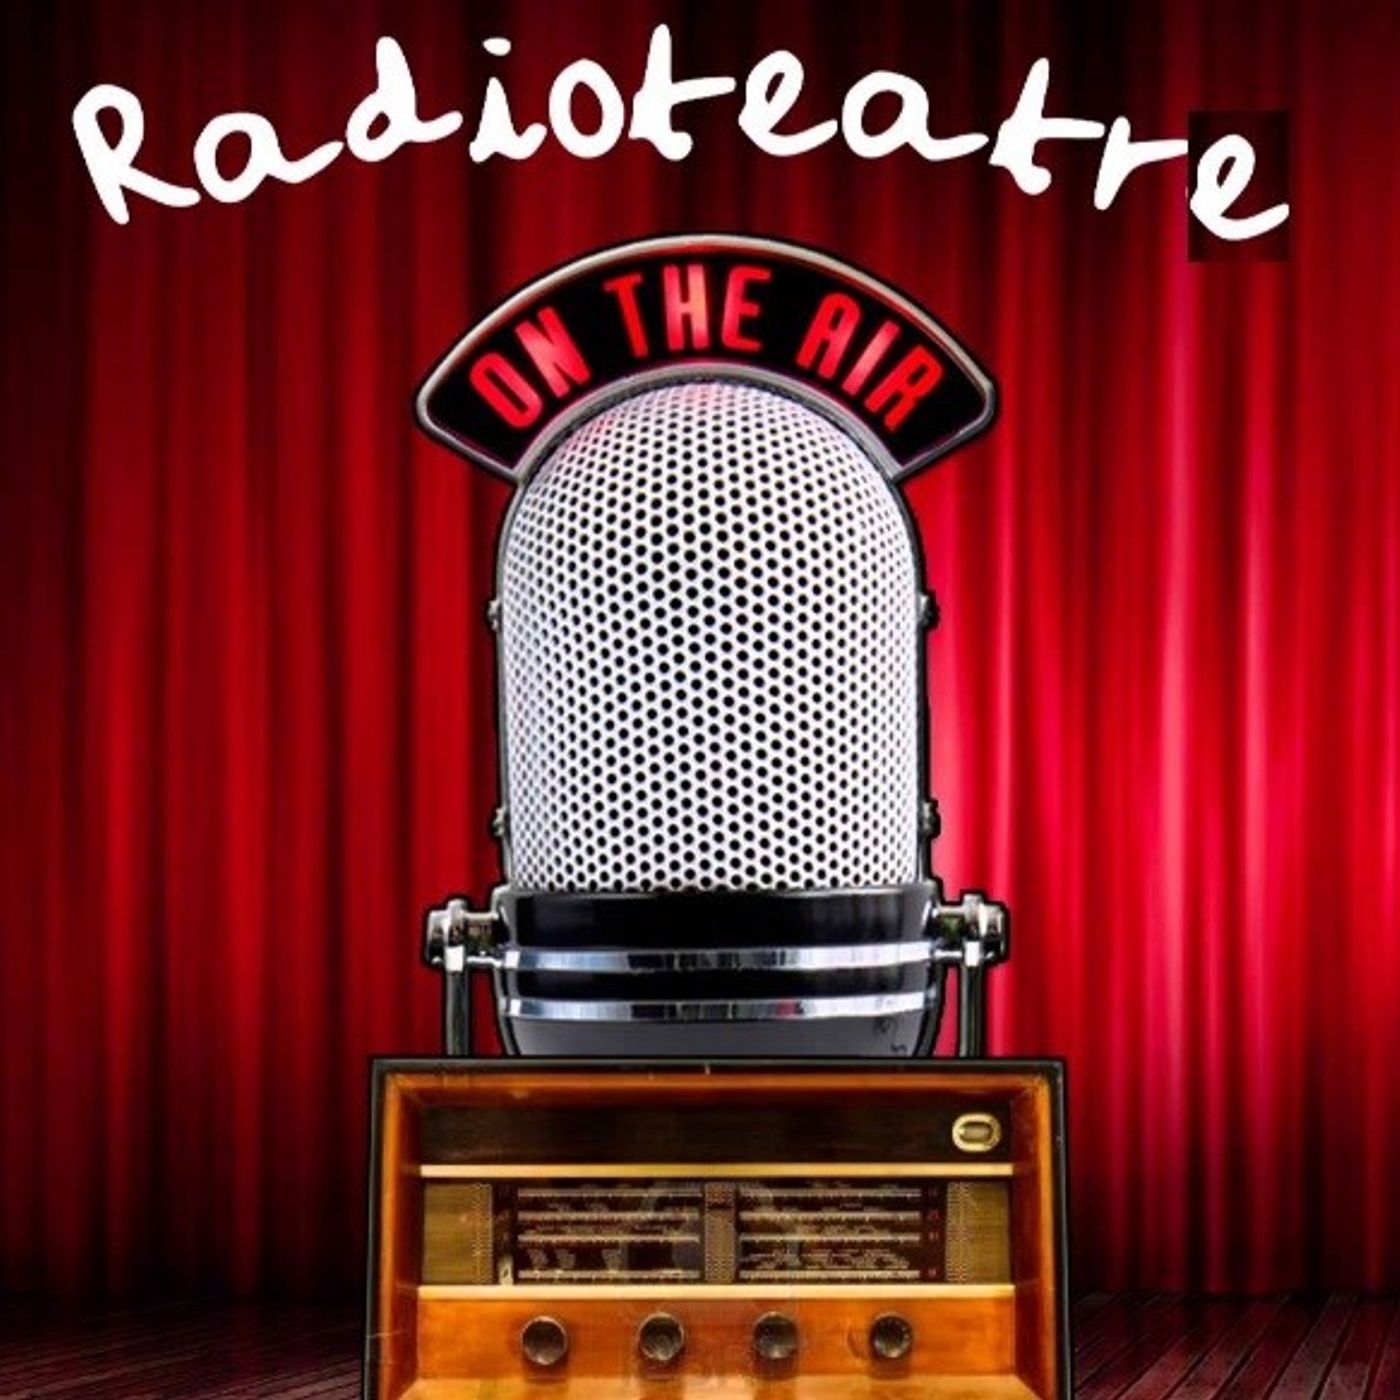 Radioteatre a Matadepera Ràdio